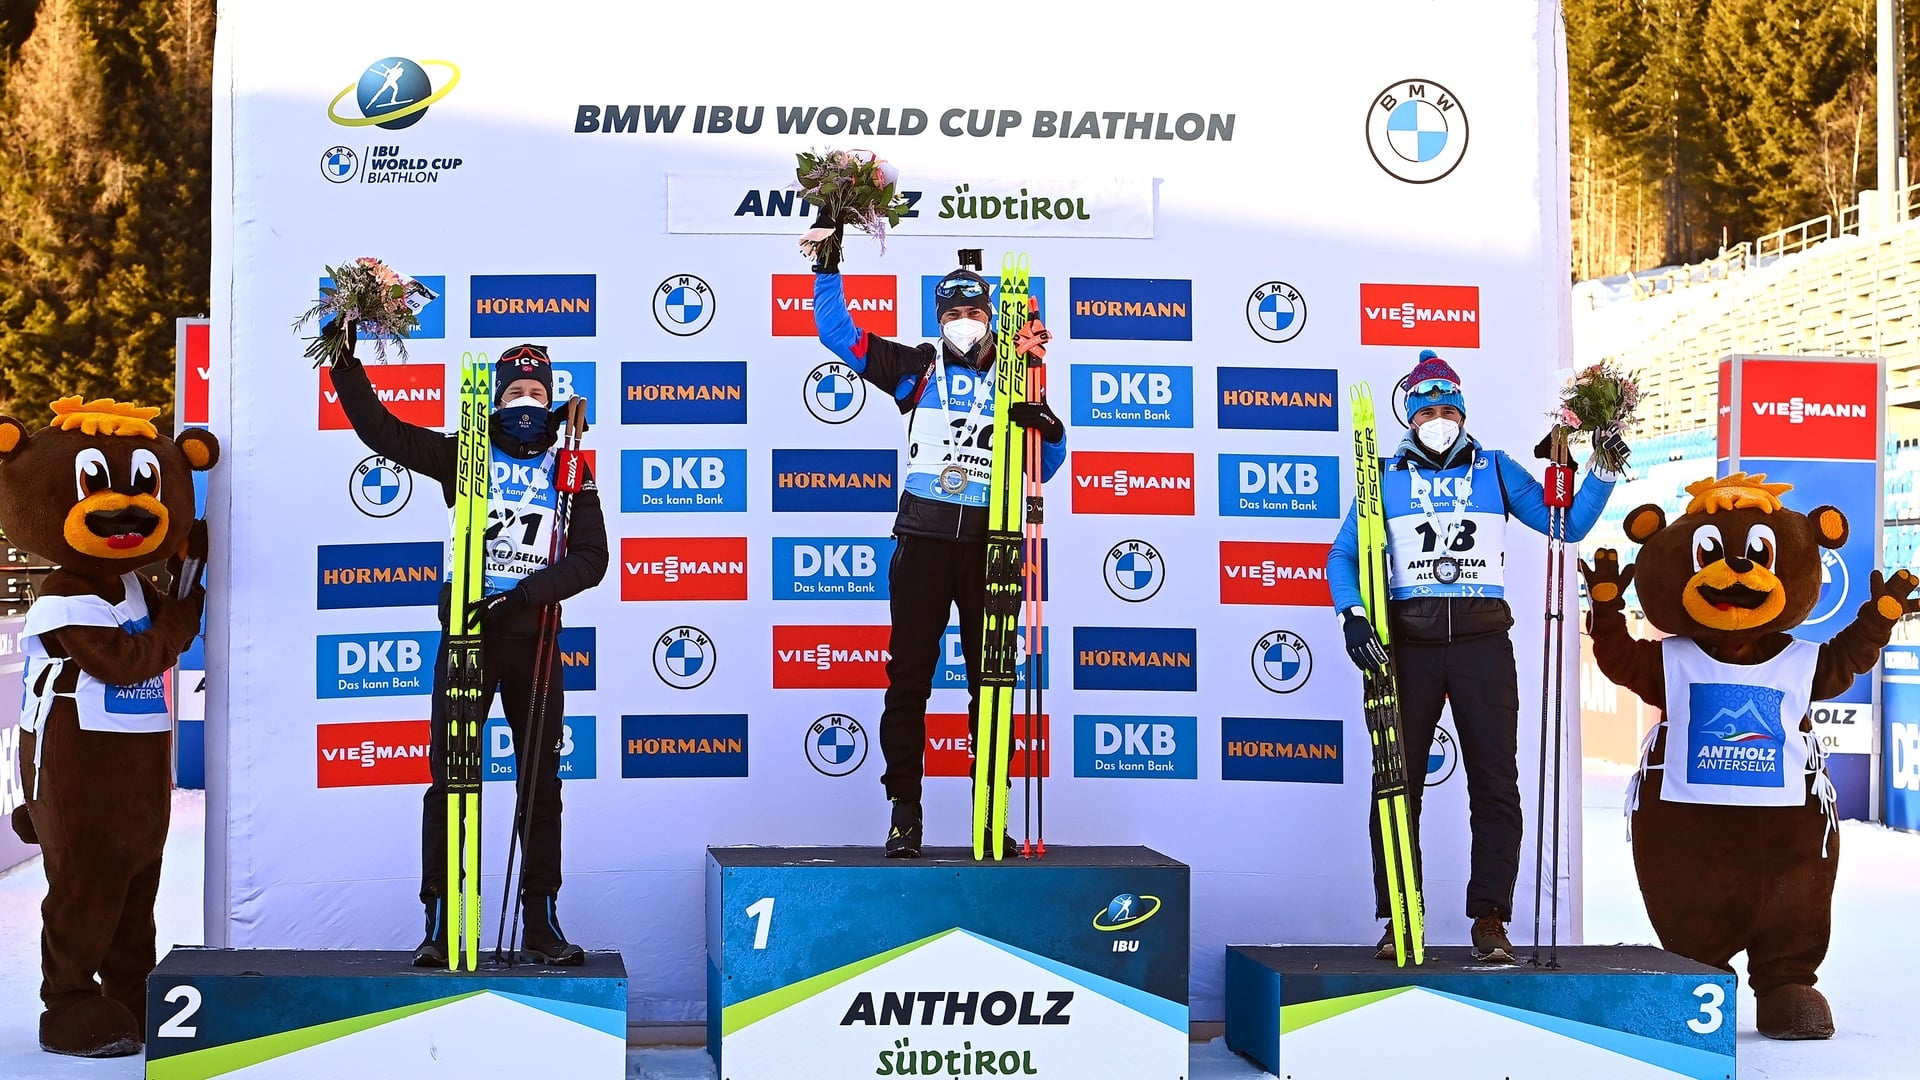 20.01.2022 - Sensational victory for Babikov at Antholz opening race